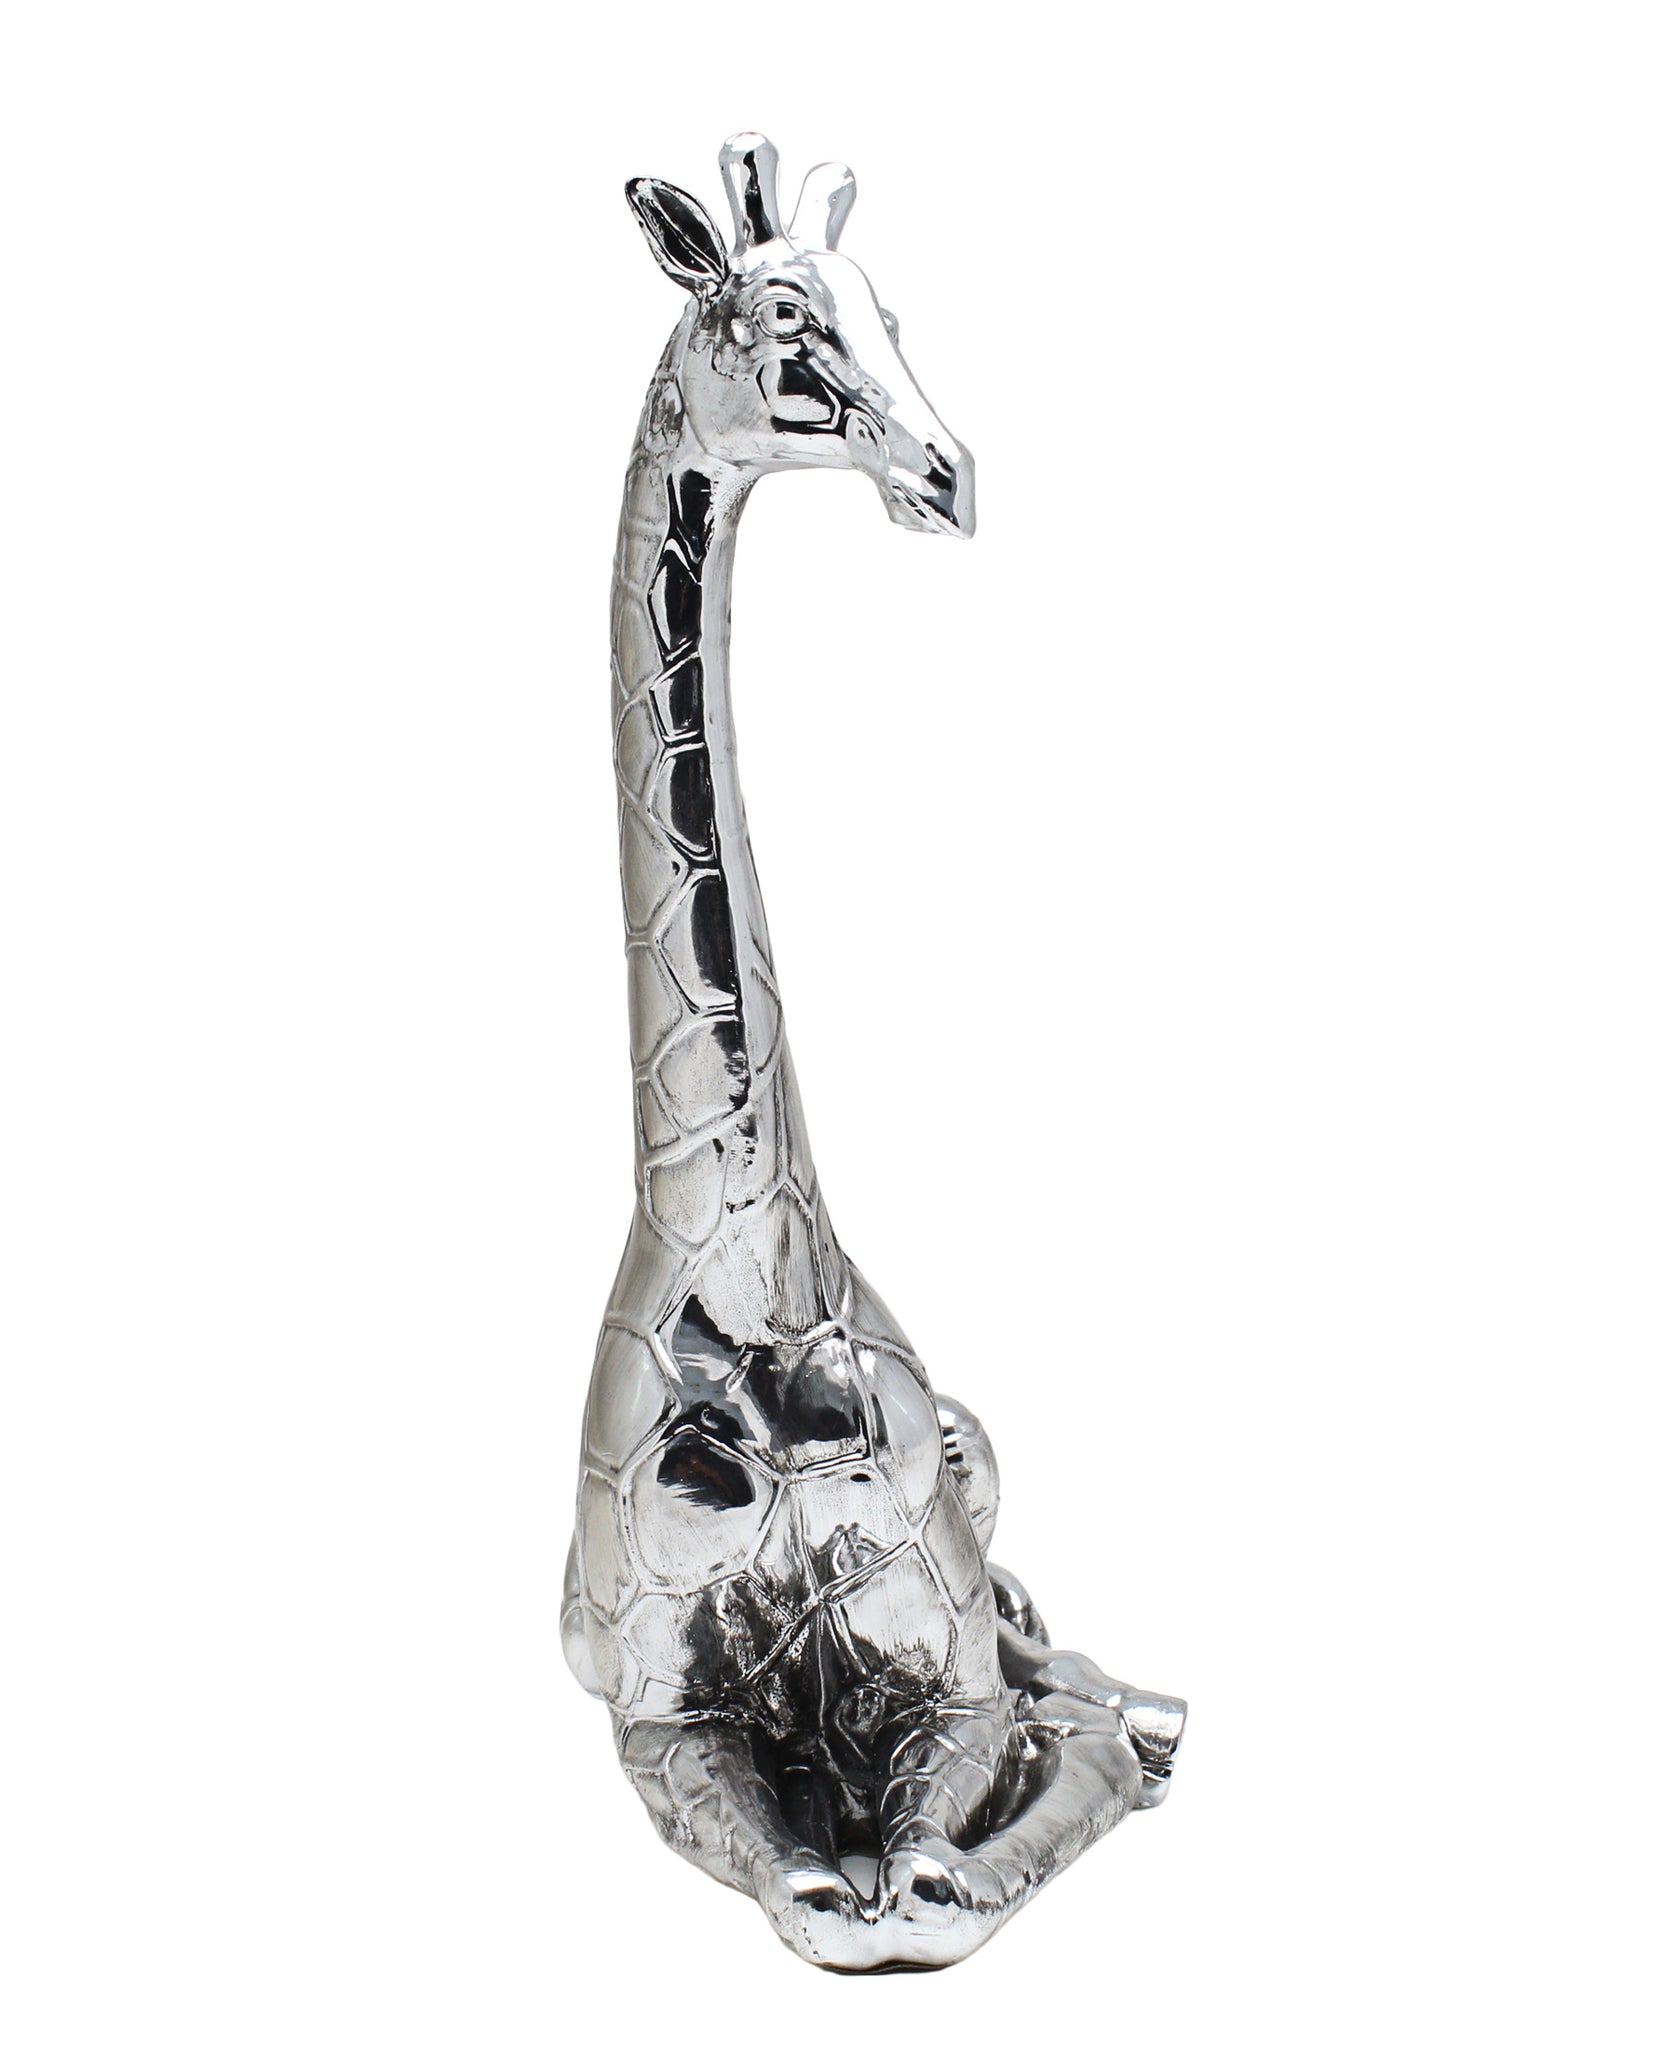 Urban Decor 30cm Antique Sitting Giraffe - Silver